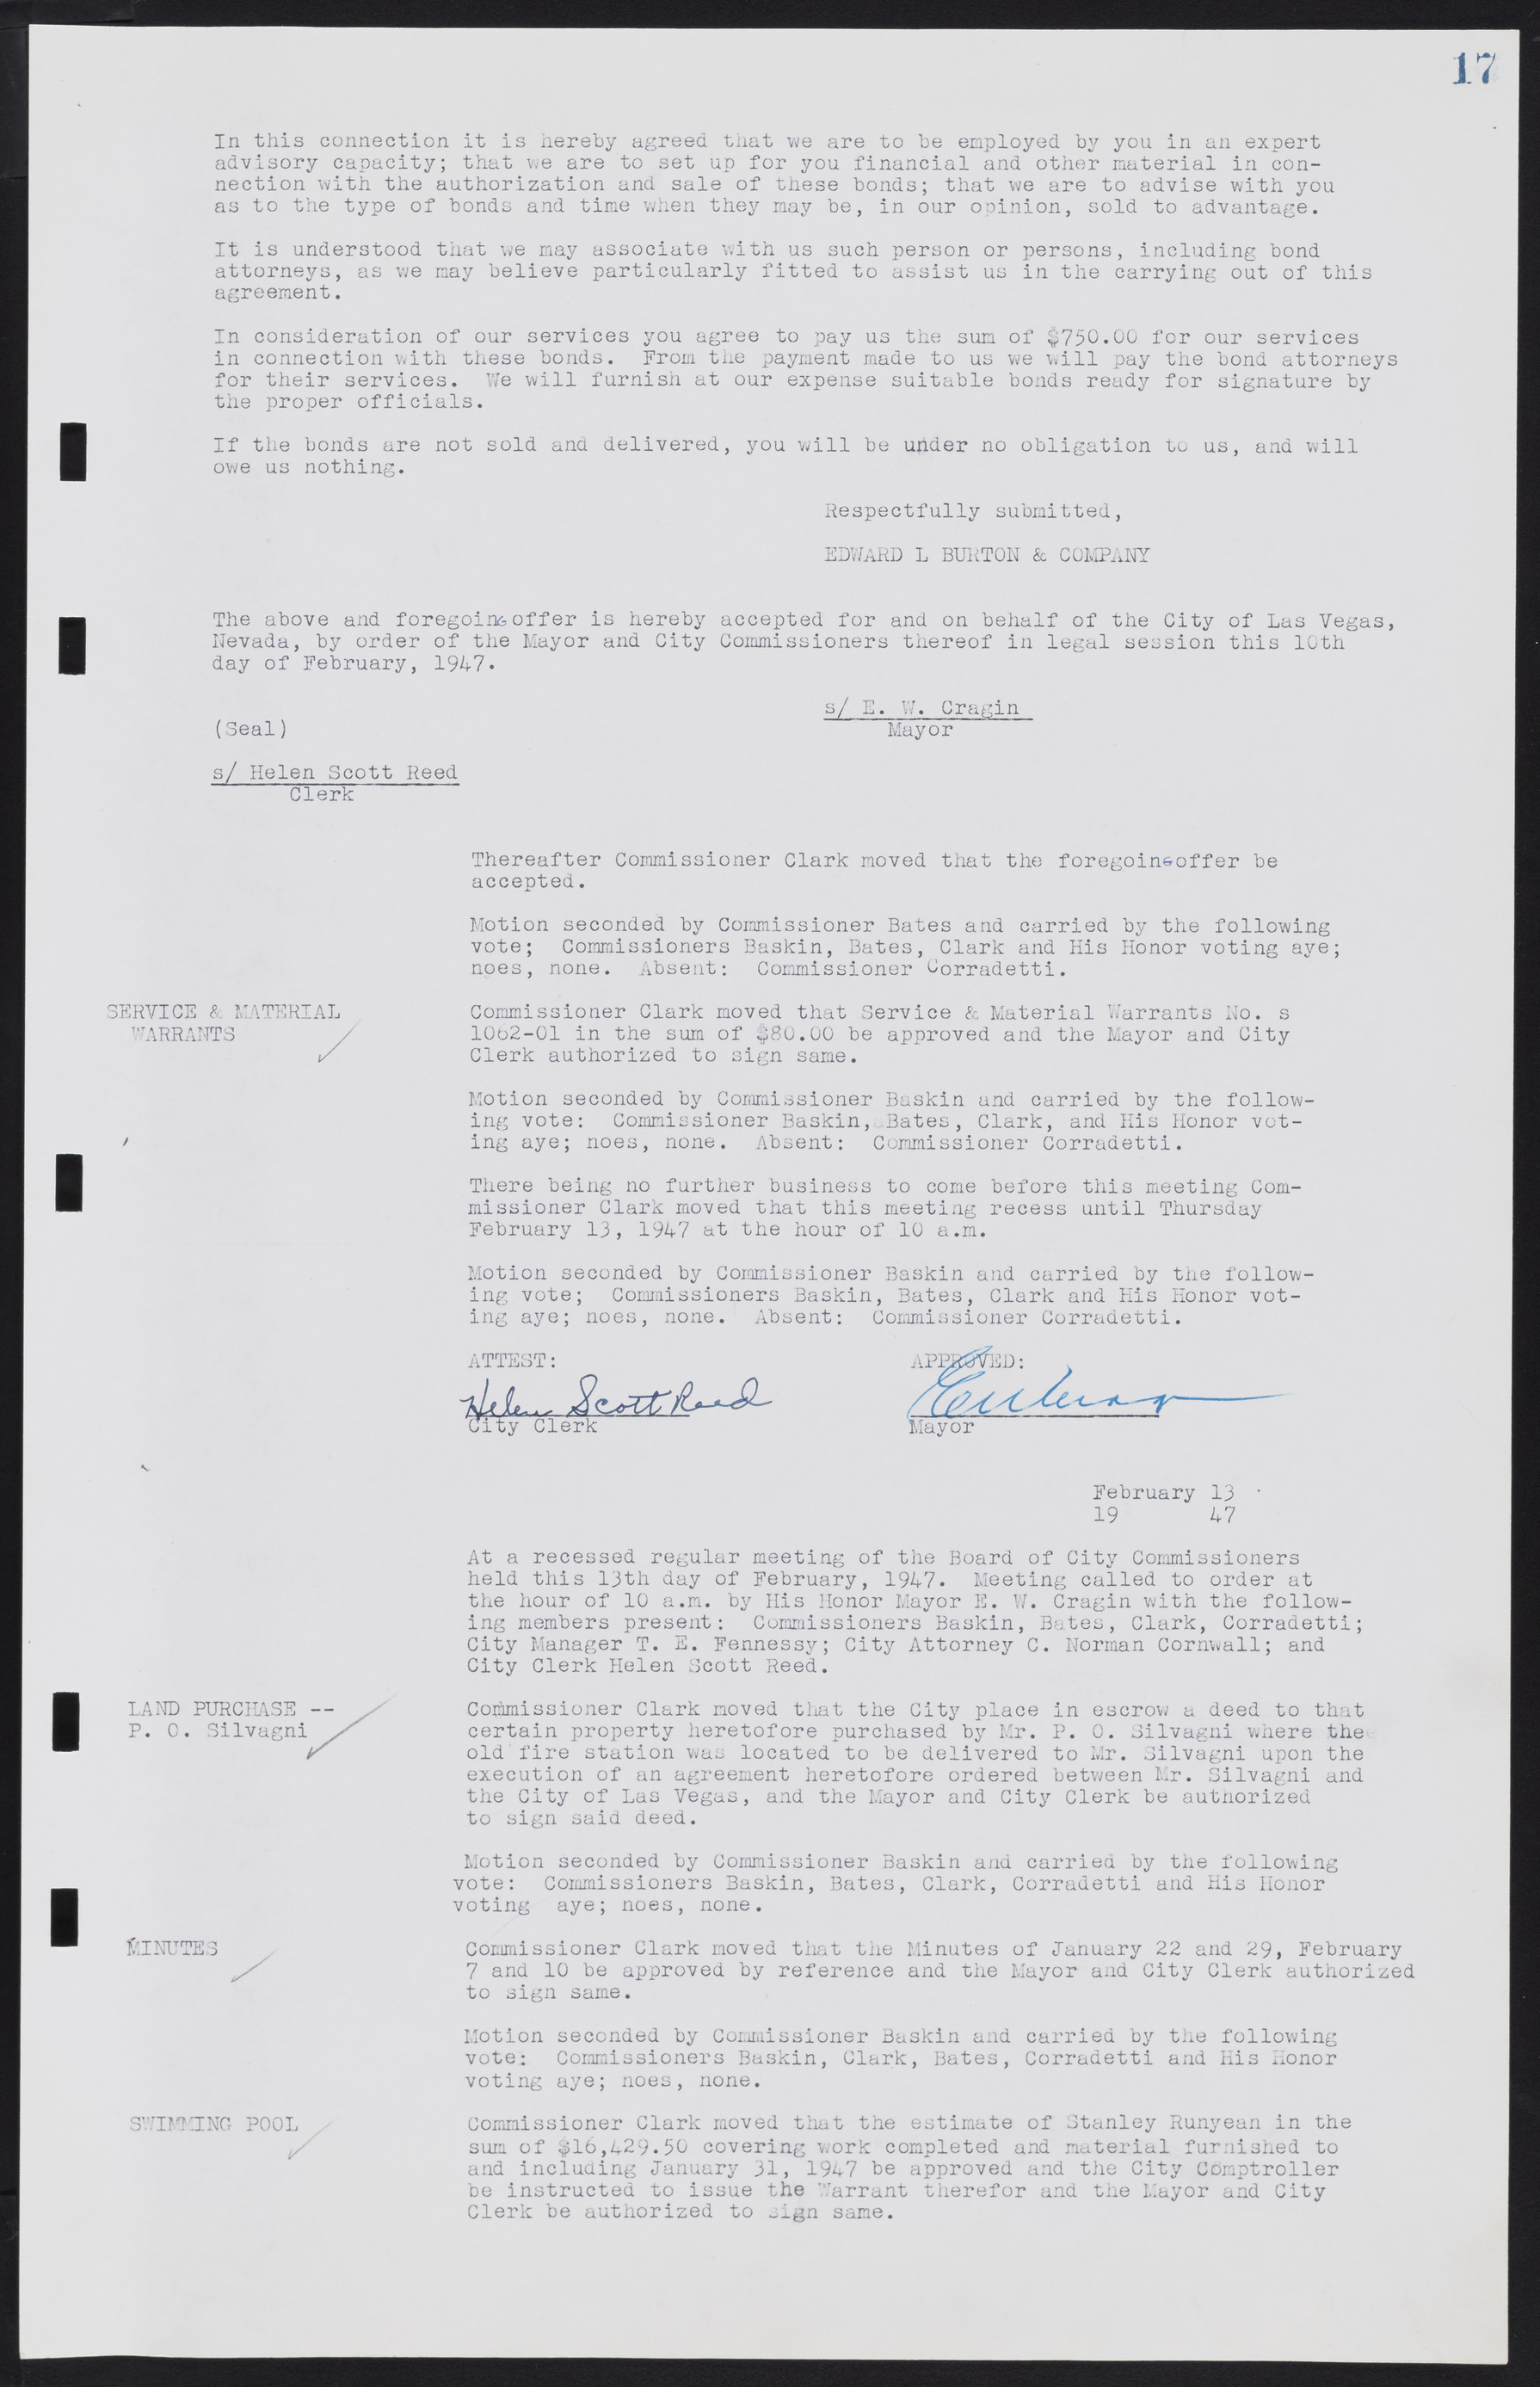 Las Vegas City Commission Minutes, January 7, 1947 to October 26, 1949, lvc000006-25